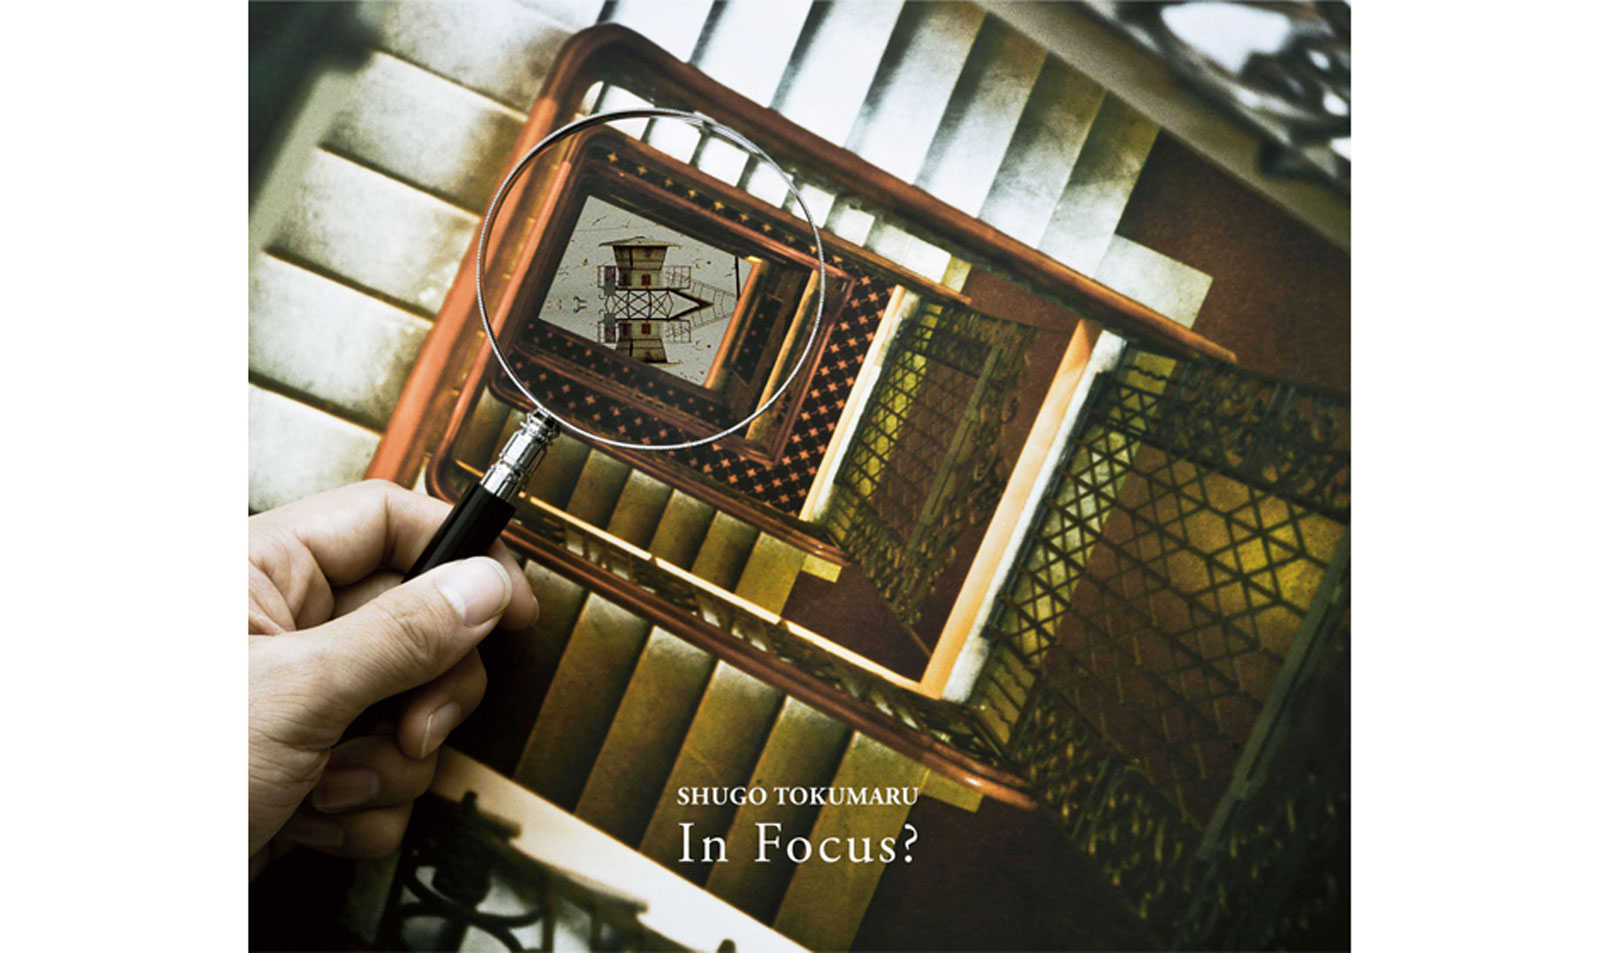  “In Focus?” by Shugo Tokumaru